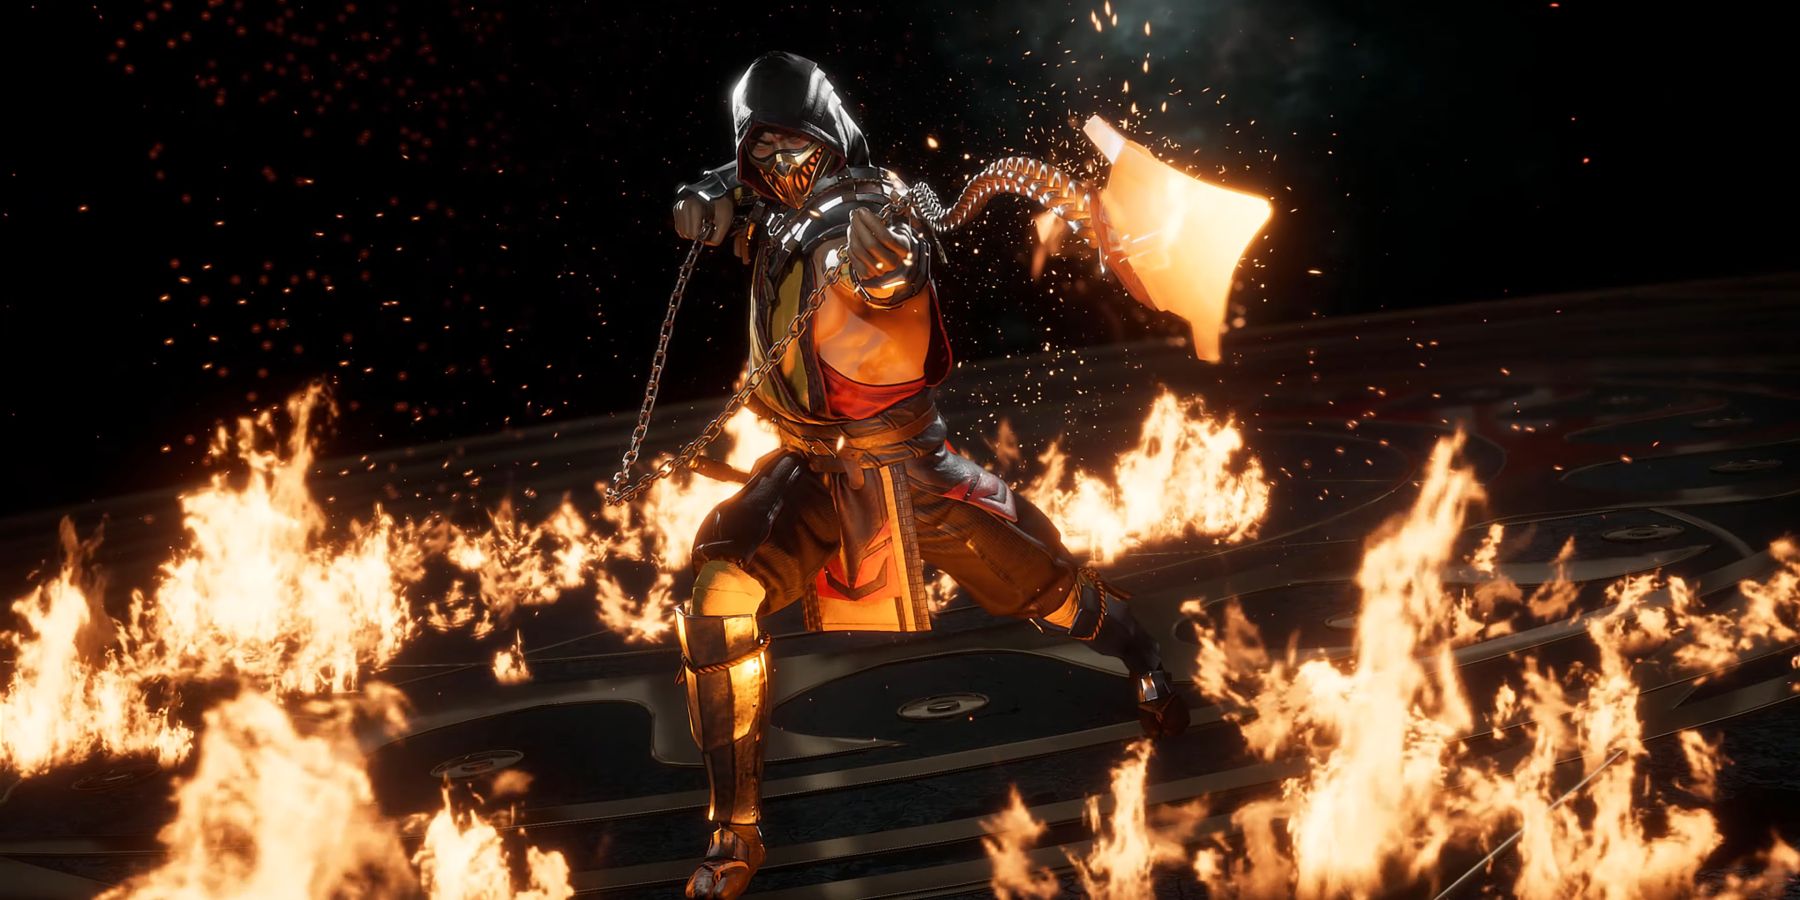 Scorpion throws his chained kunai in Mortal Kombat 11